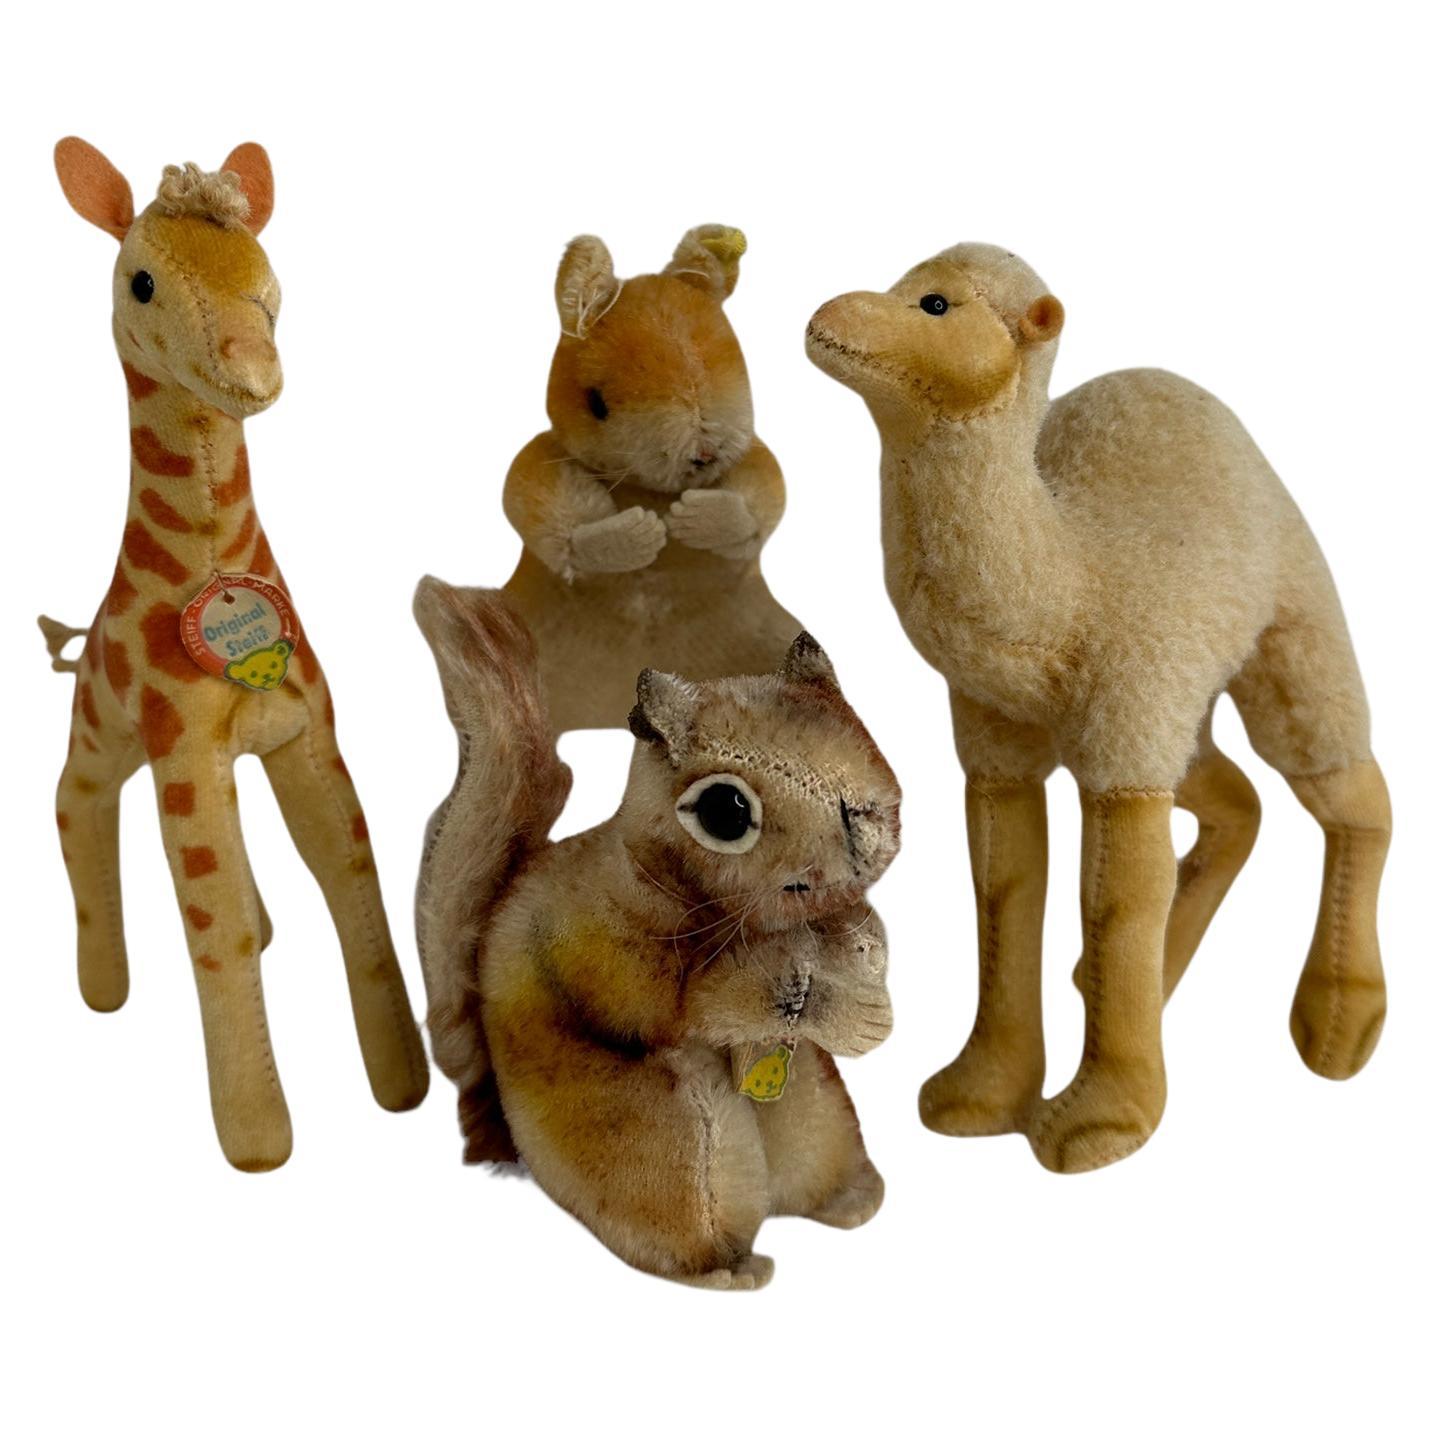 Lot of Four Vintage Steiff Animals, Squirrel Camel Hamster & Giraffe, 1960s